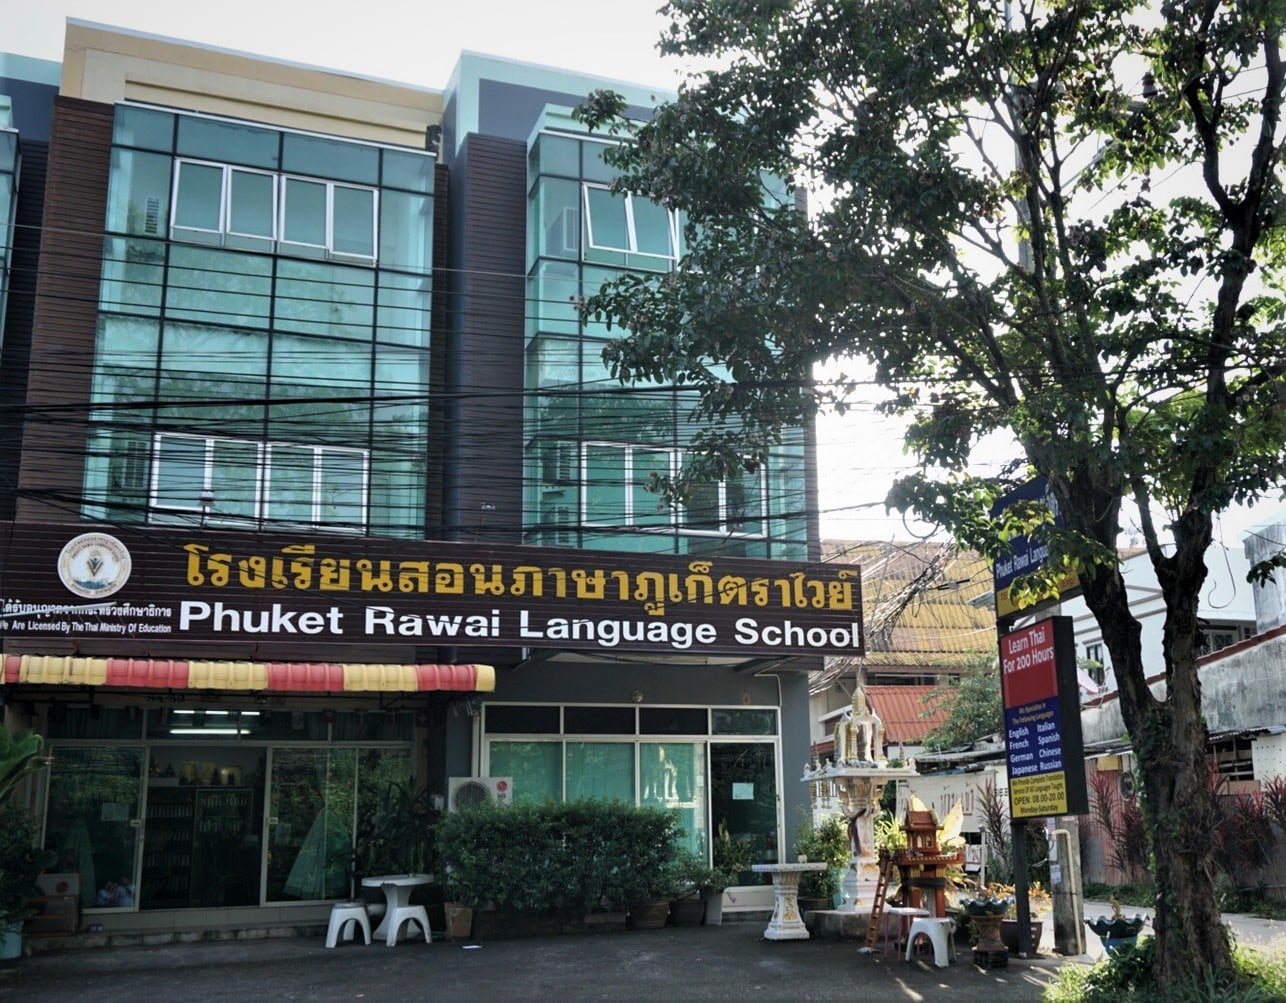 Phuket Rawai Language School